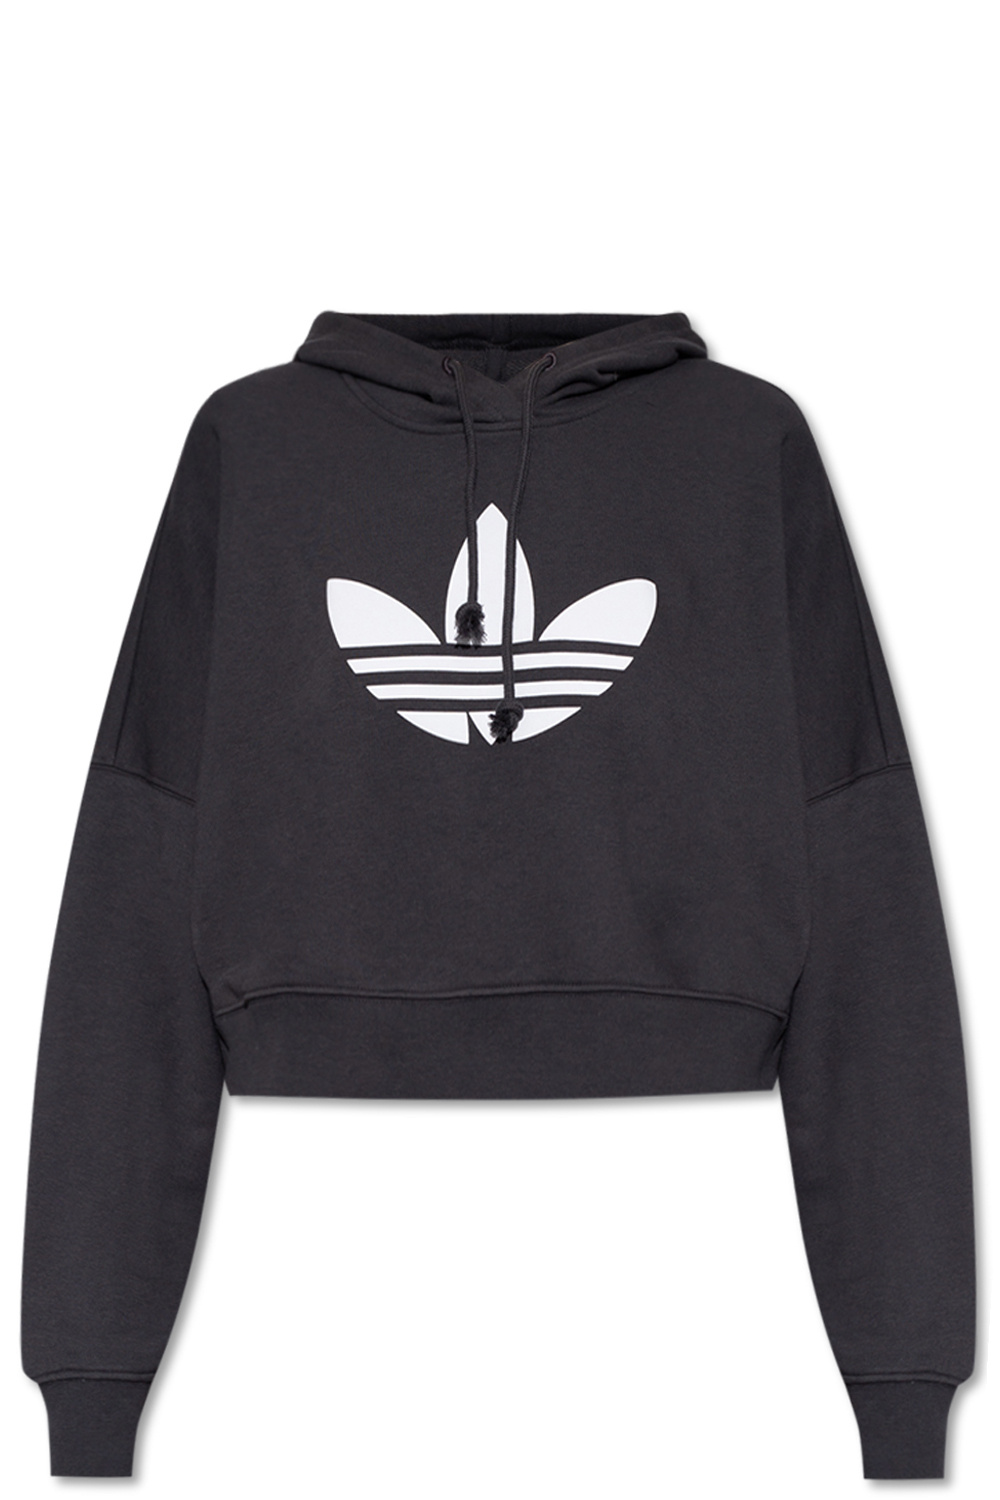 Jsy | Originals | | Clothing Adidas oversize SPLV ADIDAS Ess hoodie Women\'s Tiro StclaircomoShops 3S Cropped